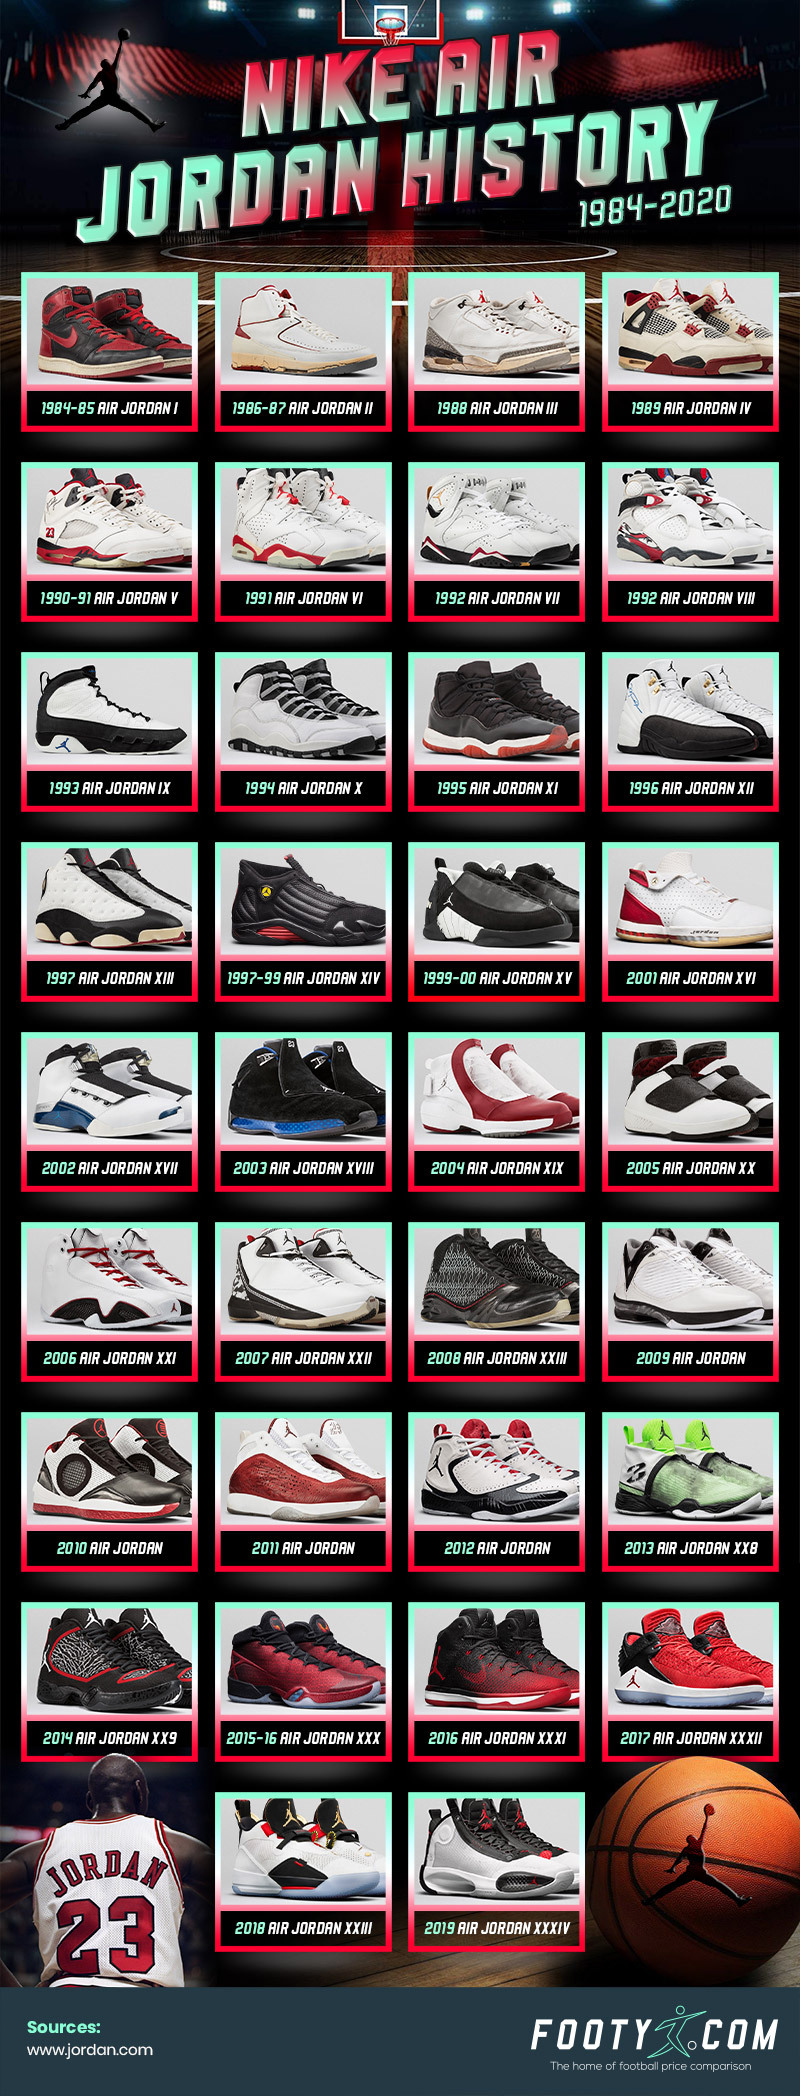 Nike Air Jordan history (complete 1984 